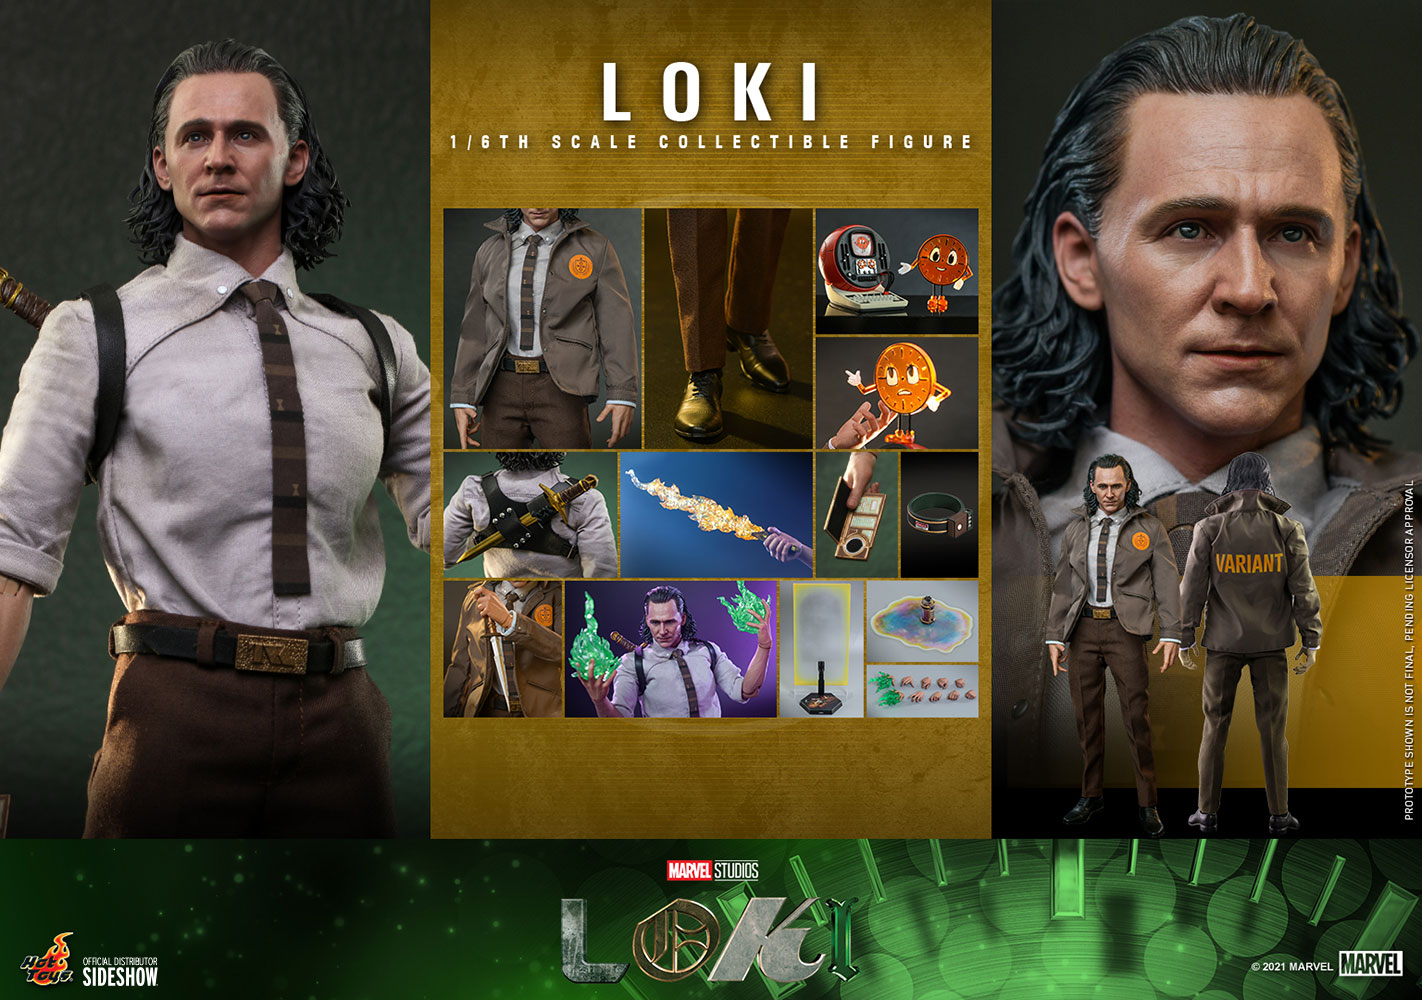 Loki (Disney+) Sixth Scale Figure by Hot Toys